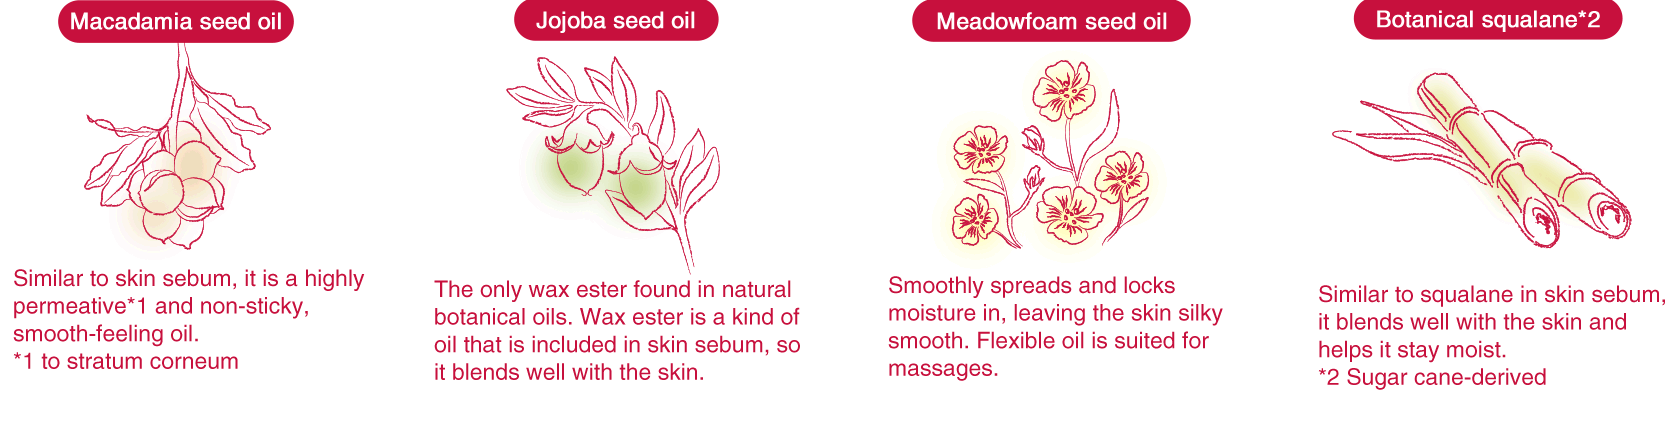 Plants used as botanical oils. They are macadamia seed oil, jojoba seed oil, meadowfoam seed oil, and botanical squalane.